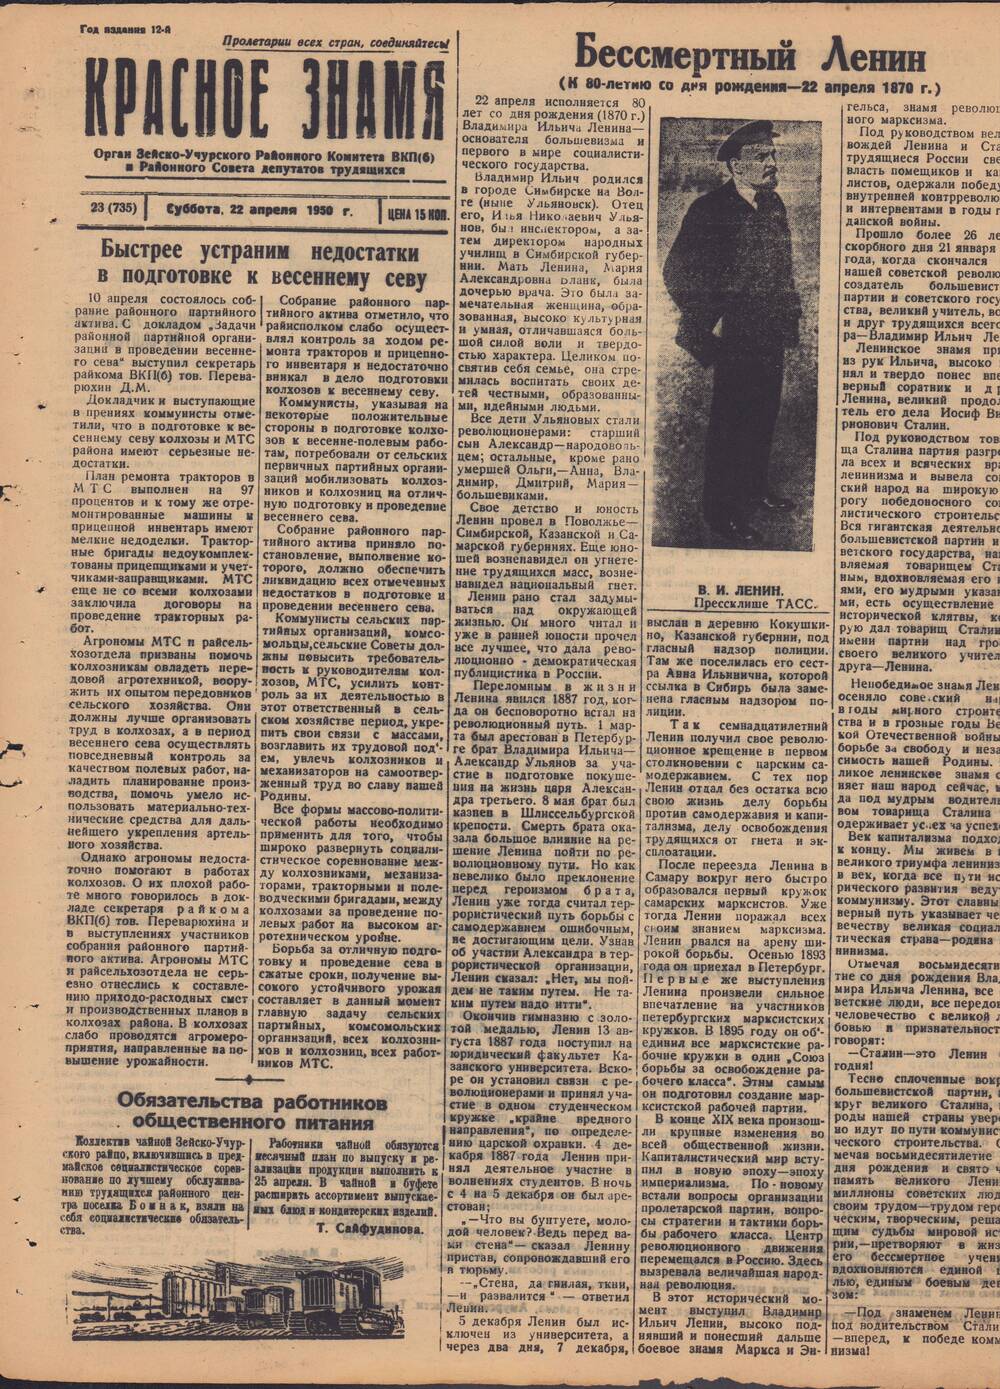 Газета Красное знамя №23 (735) от 22 апреля 1950 года.